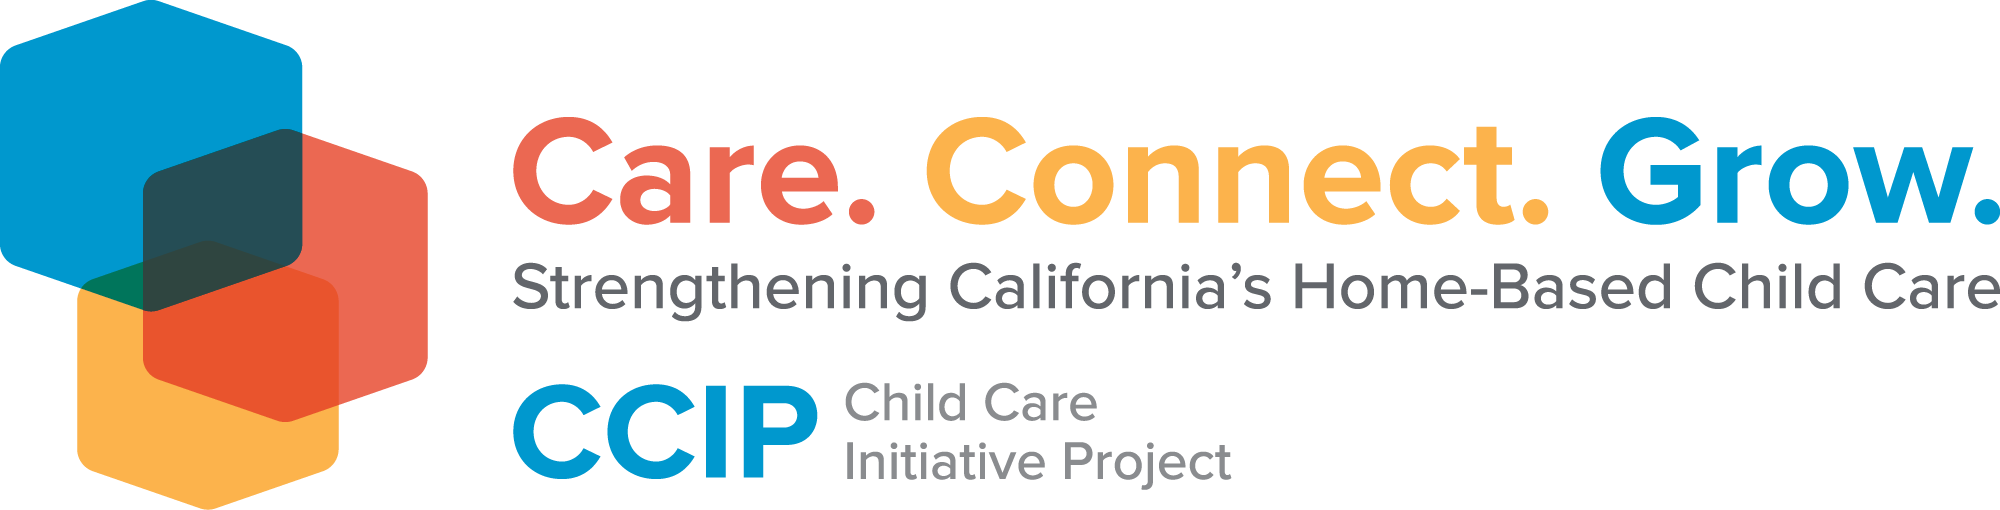 Child Care Initiative Project Logo 